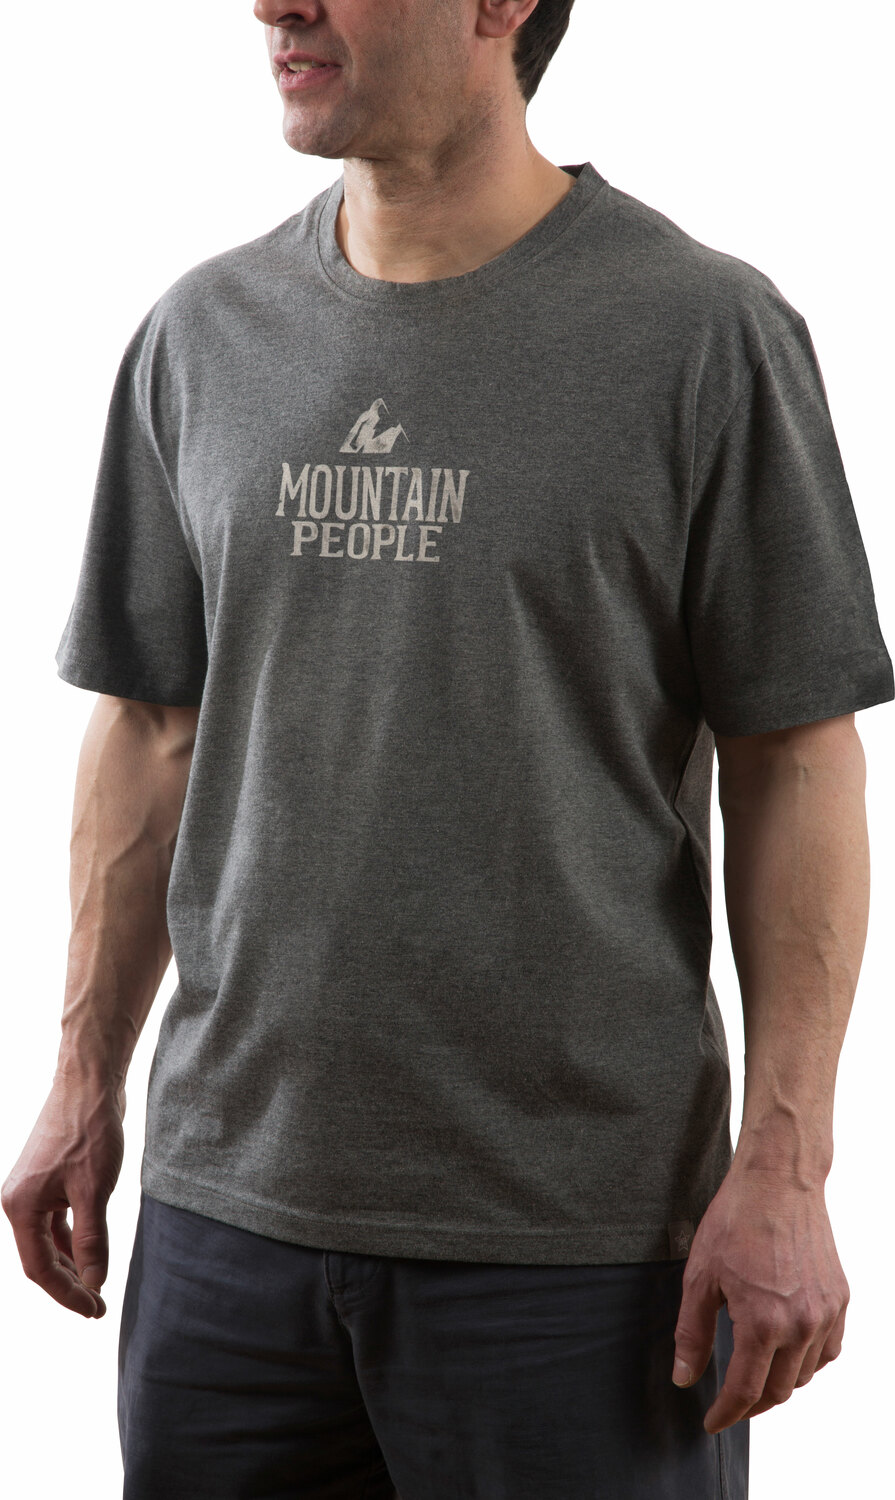 Mountain People by We People - Mountain People - Large Gray Unisex T-Shirt